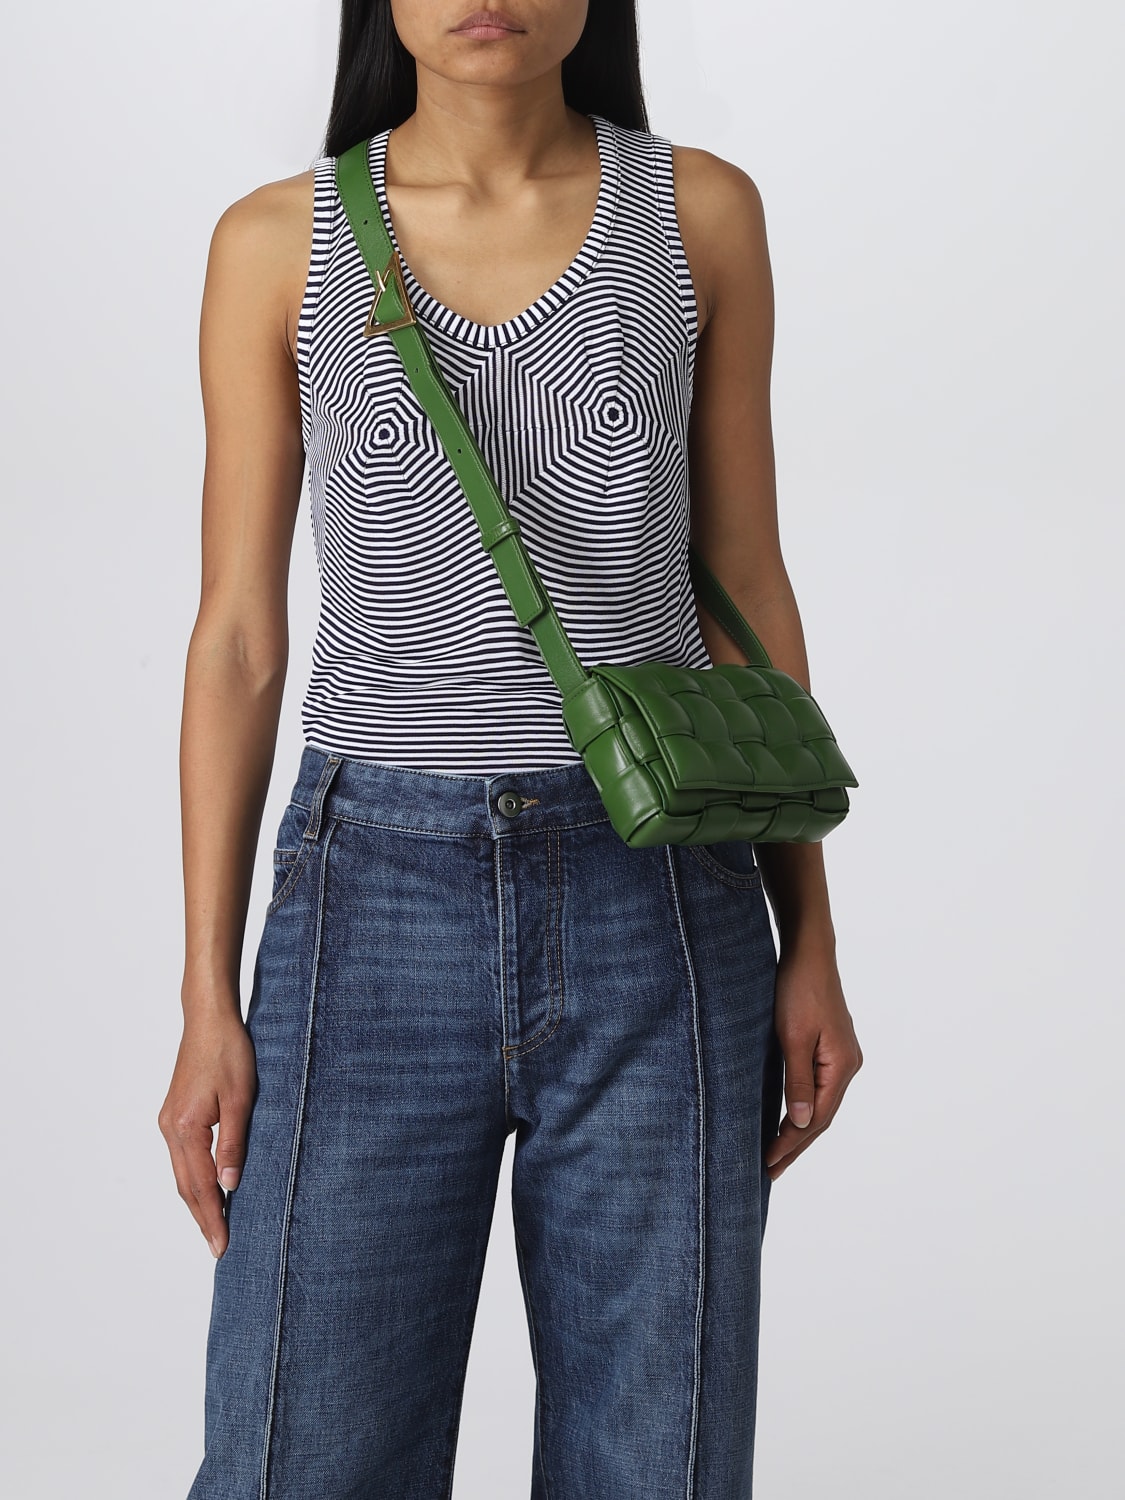 Bottega Veneta Outlet: mini bag for woman - Green | Bottega Veneta